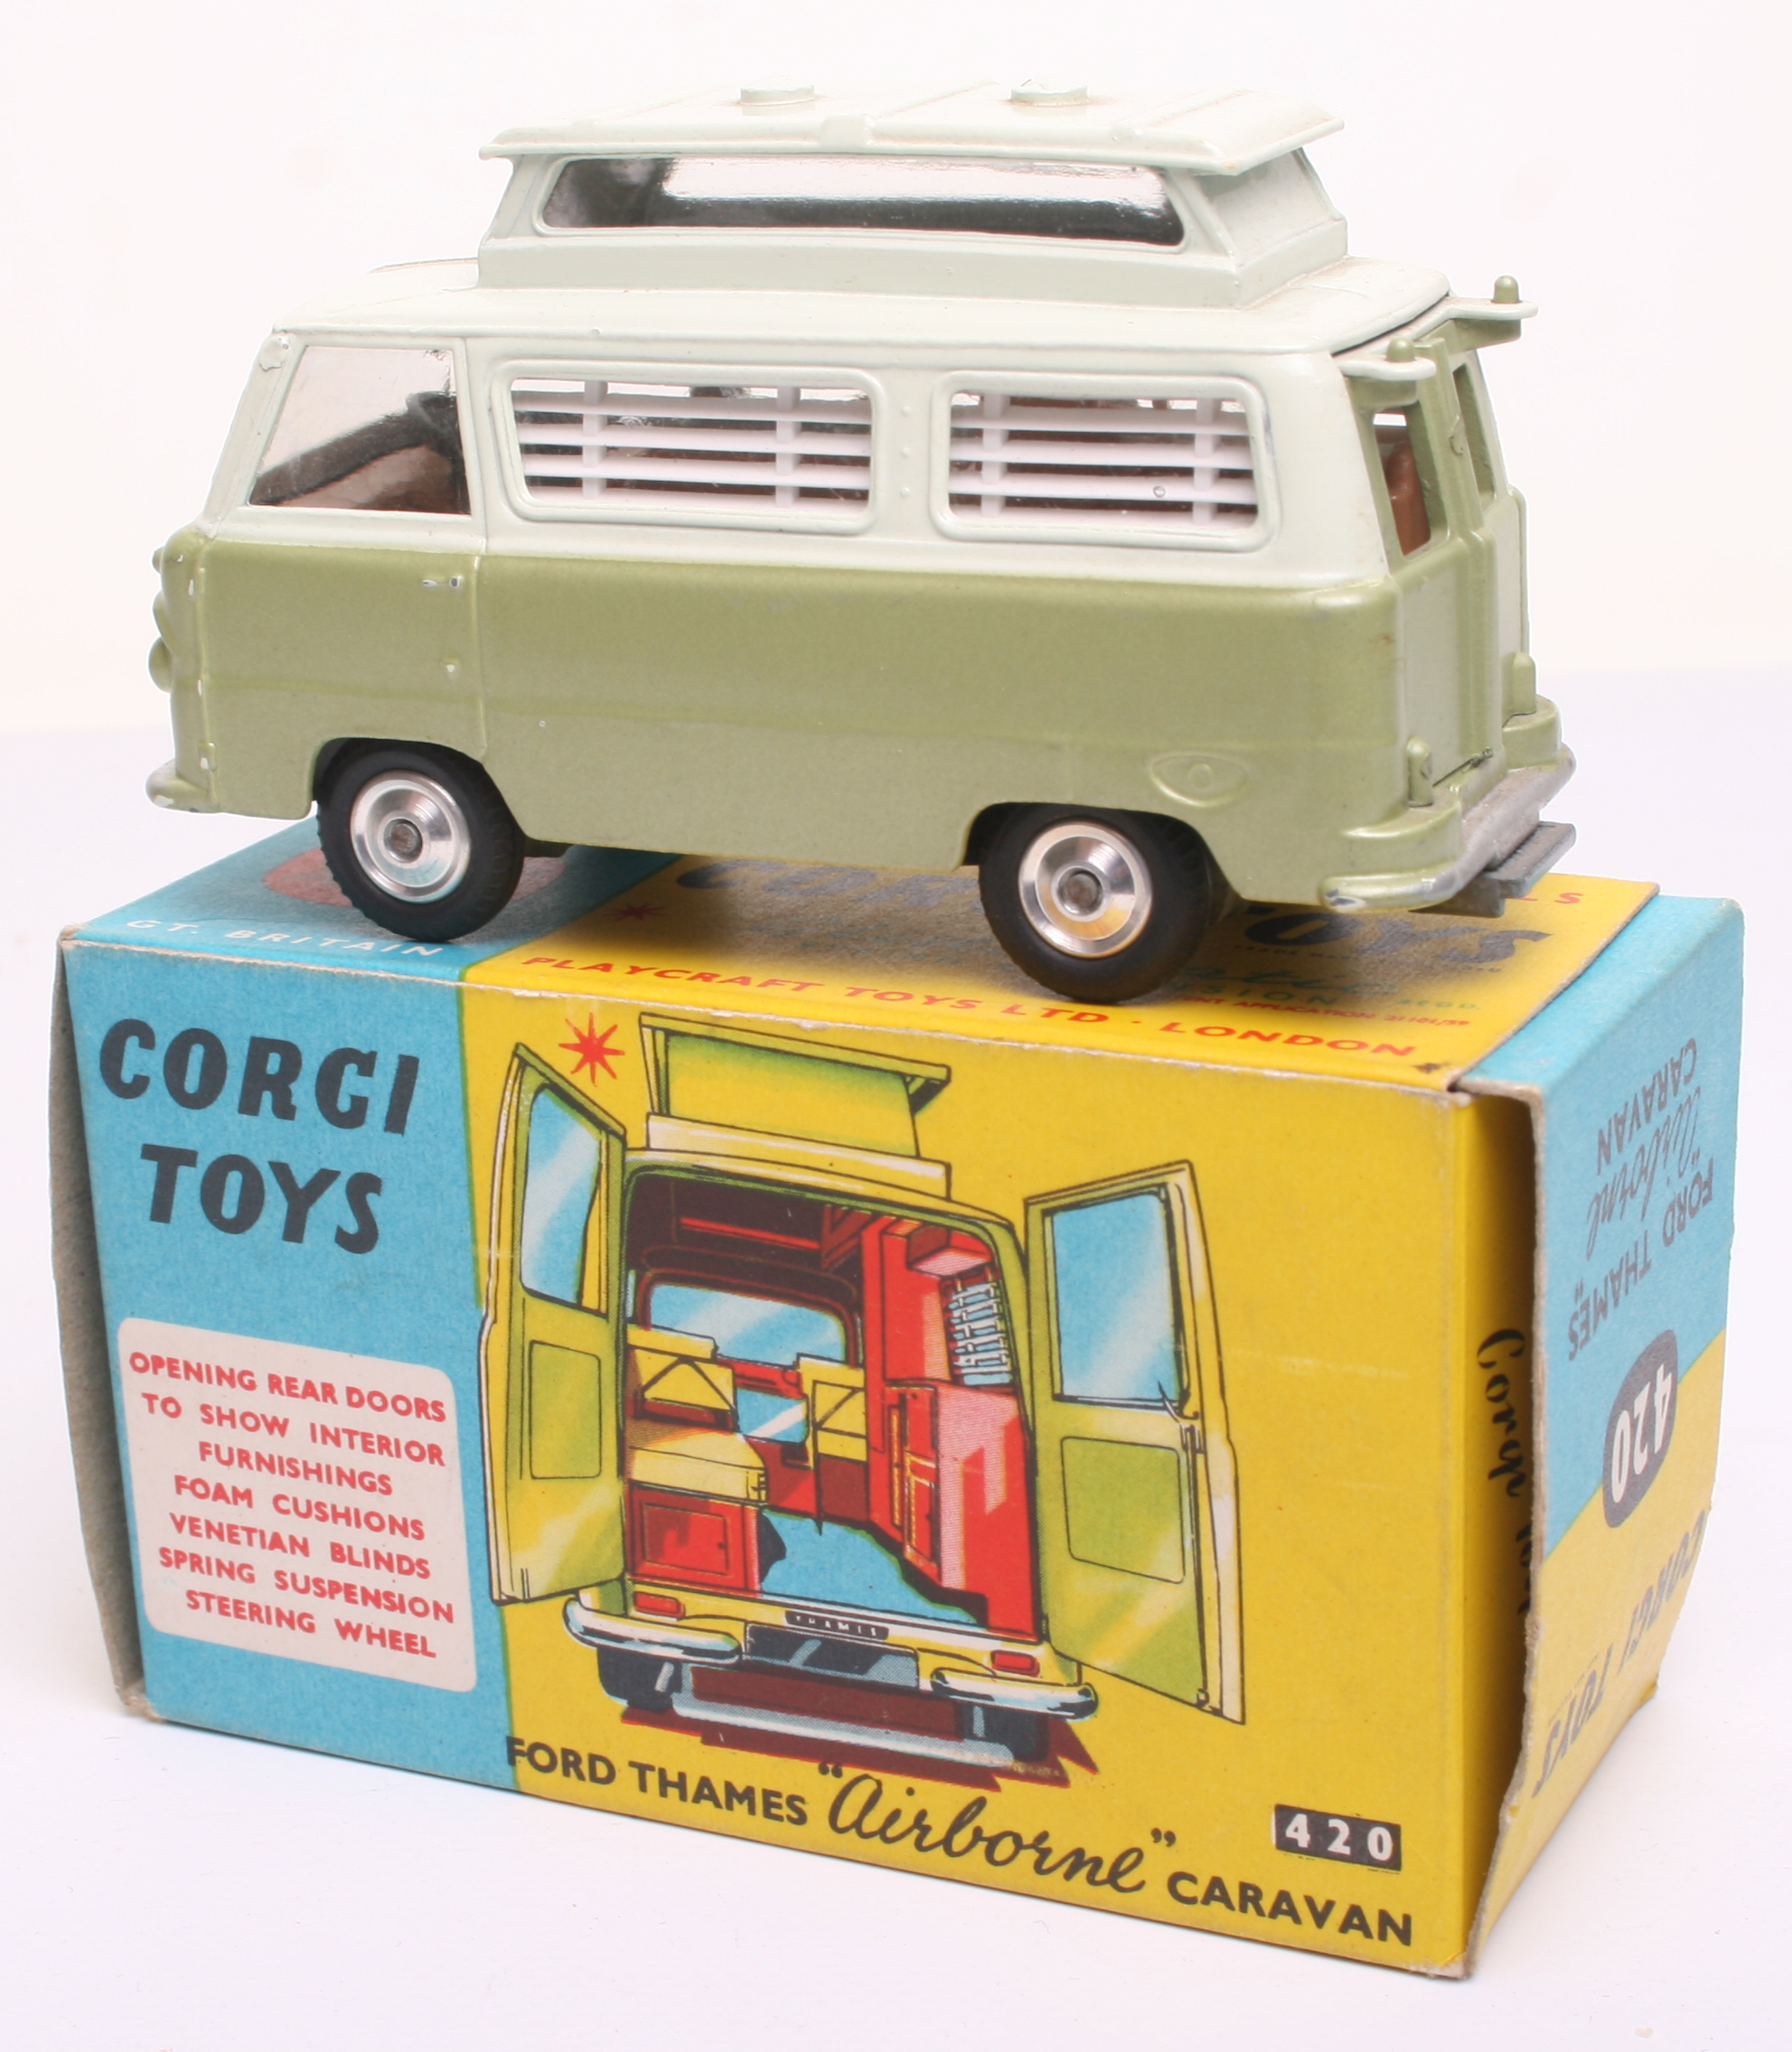 Corgi Toys 420 Ford Thames Airbourne Caravan, metallic olive green/apple white body, brown - Image 2 of 2